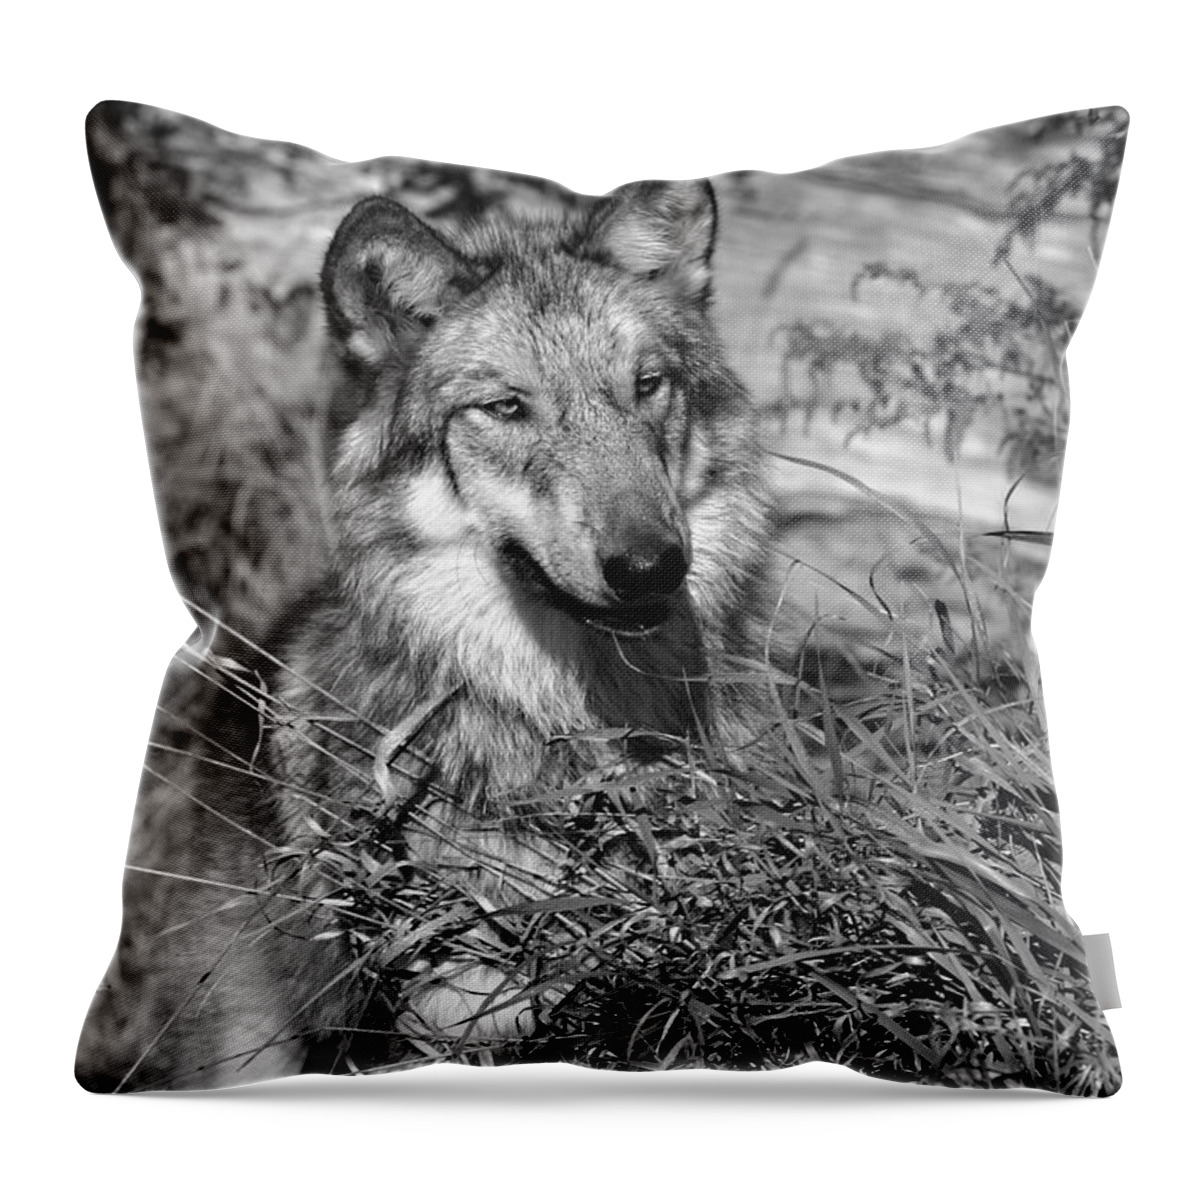 Wolf Pup Throw Pillow featuring the photograph Curious Wolf Pup by Shari Jardina